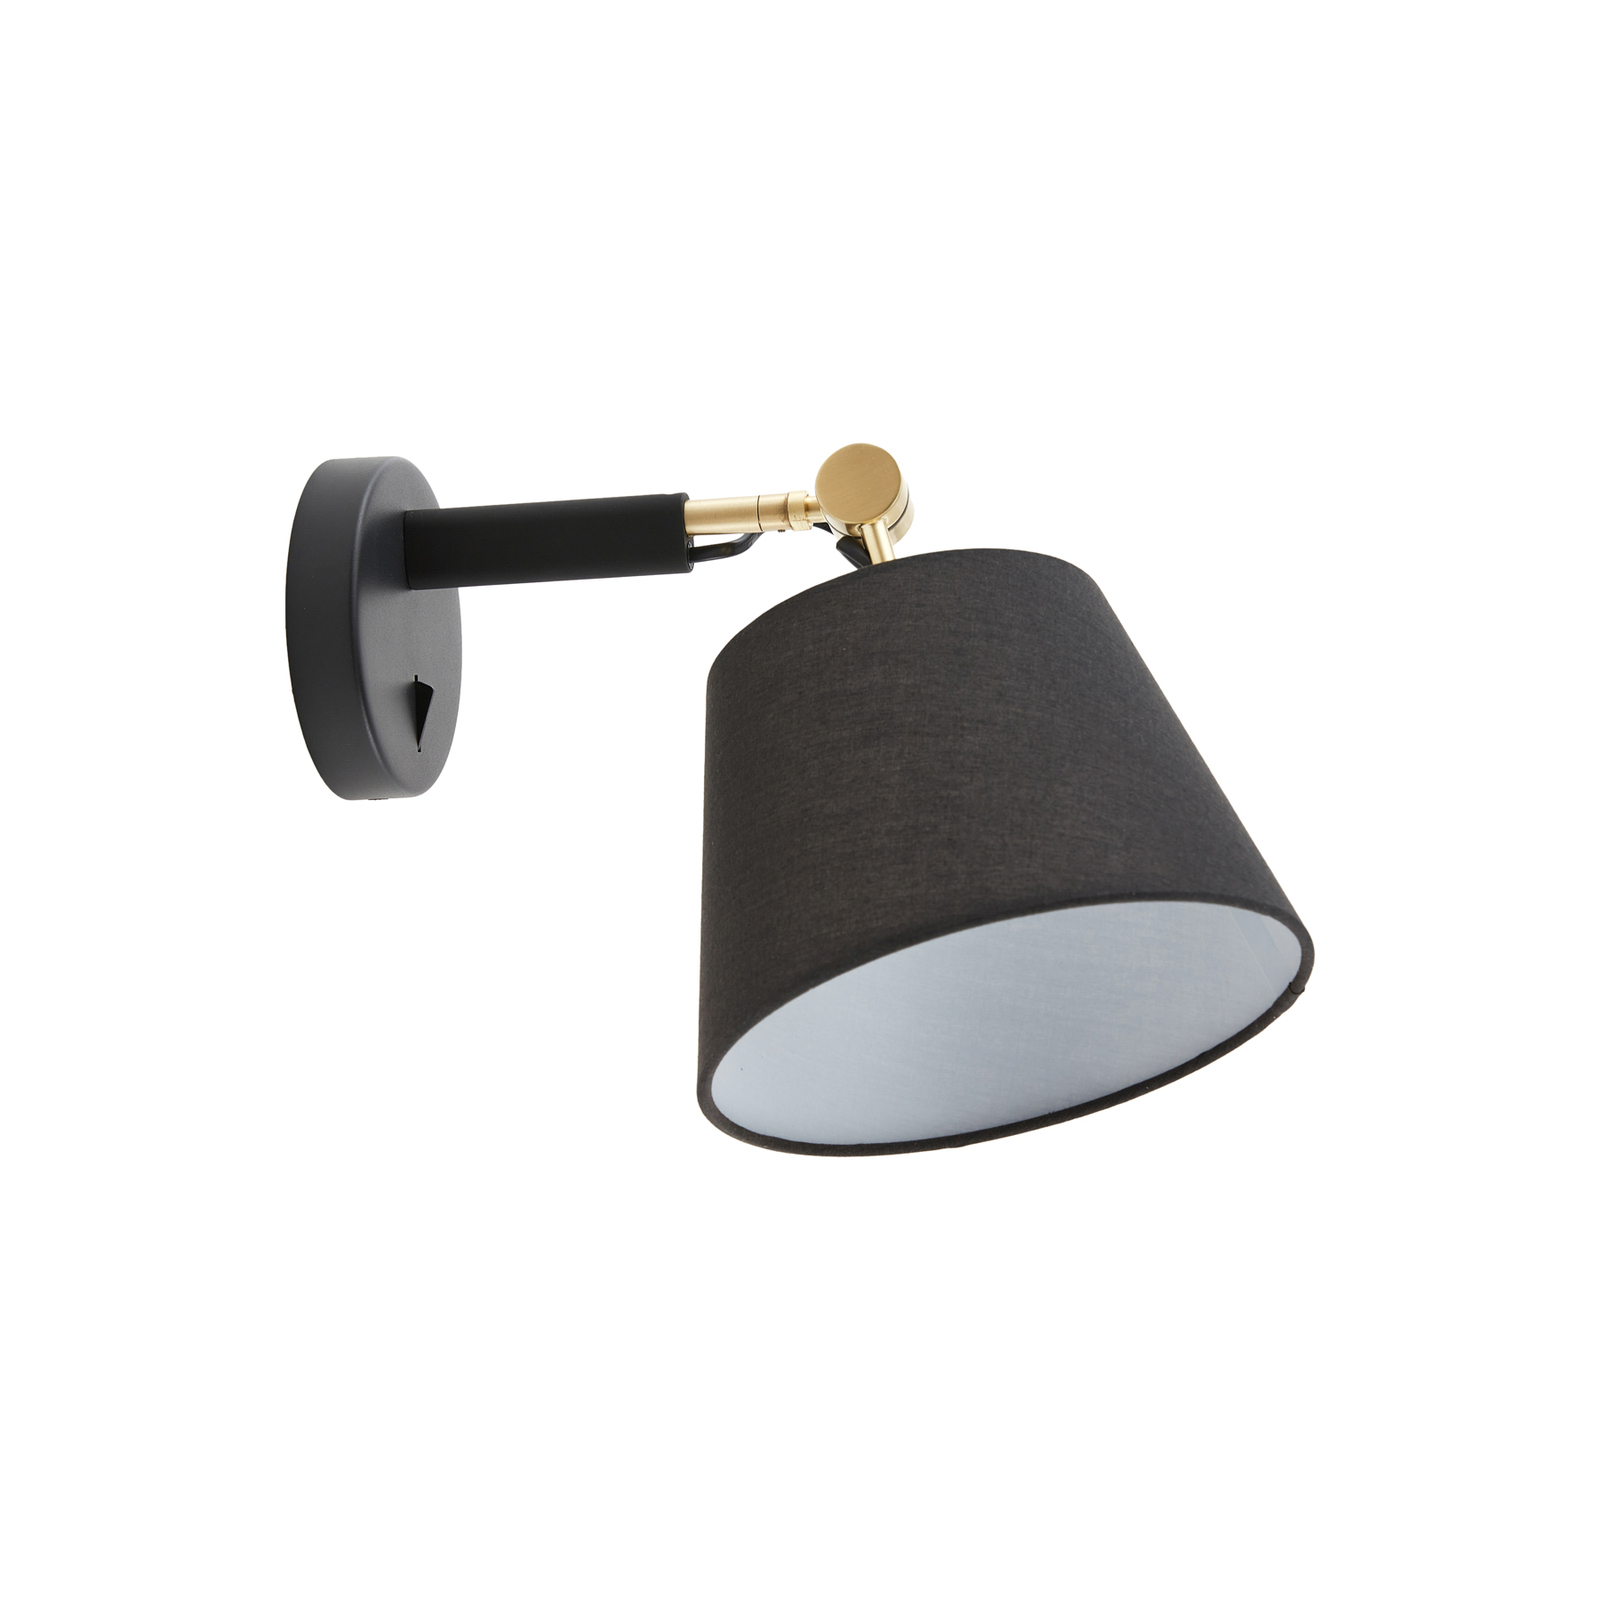 Lucande wall lamp Marvaine, black/gold-coloured, adjustable